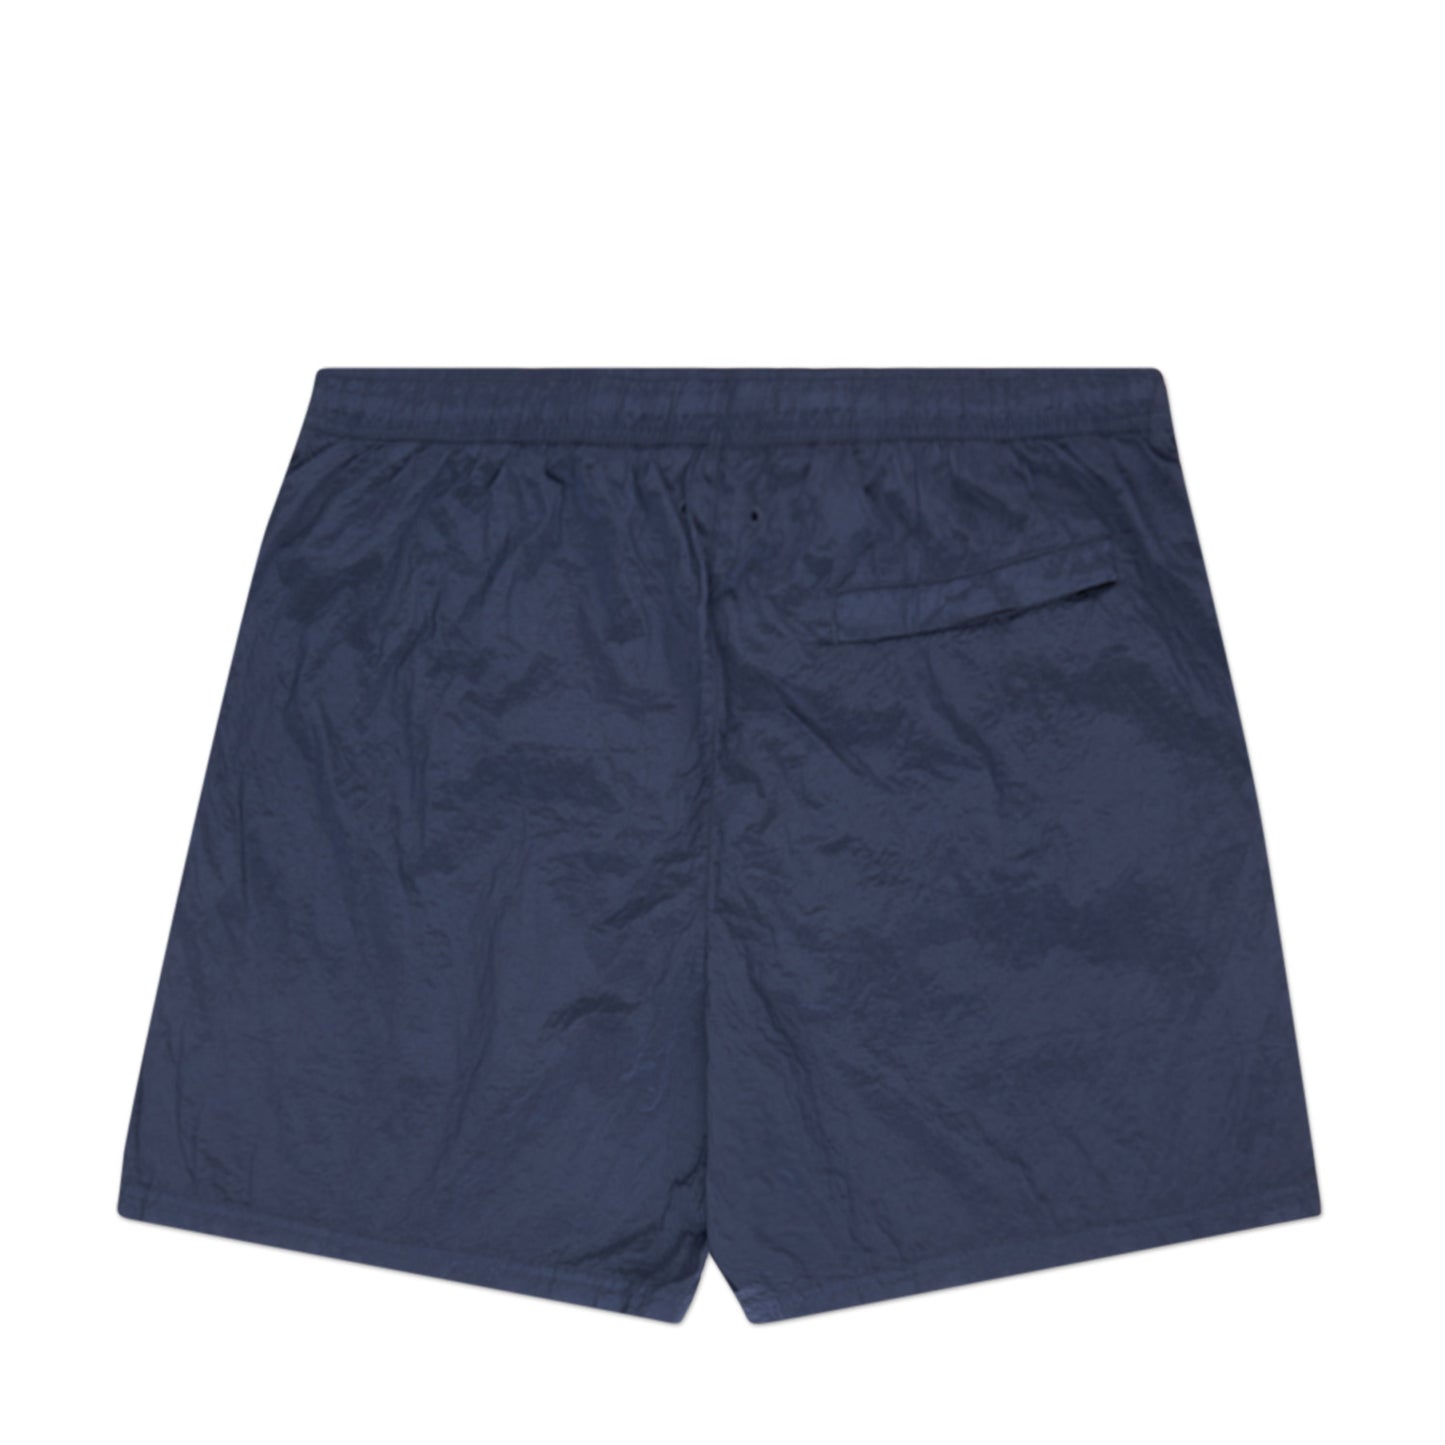 stone island econyl® regenerated nylon shorts (dark blue)